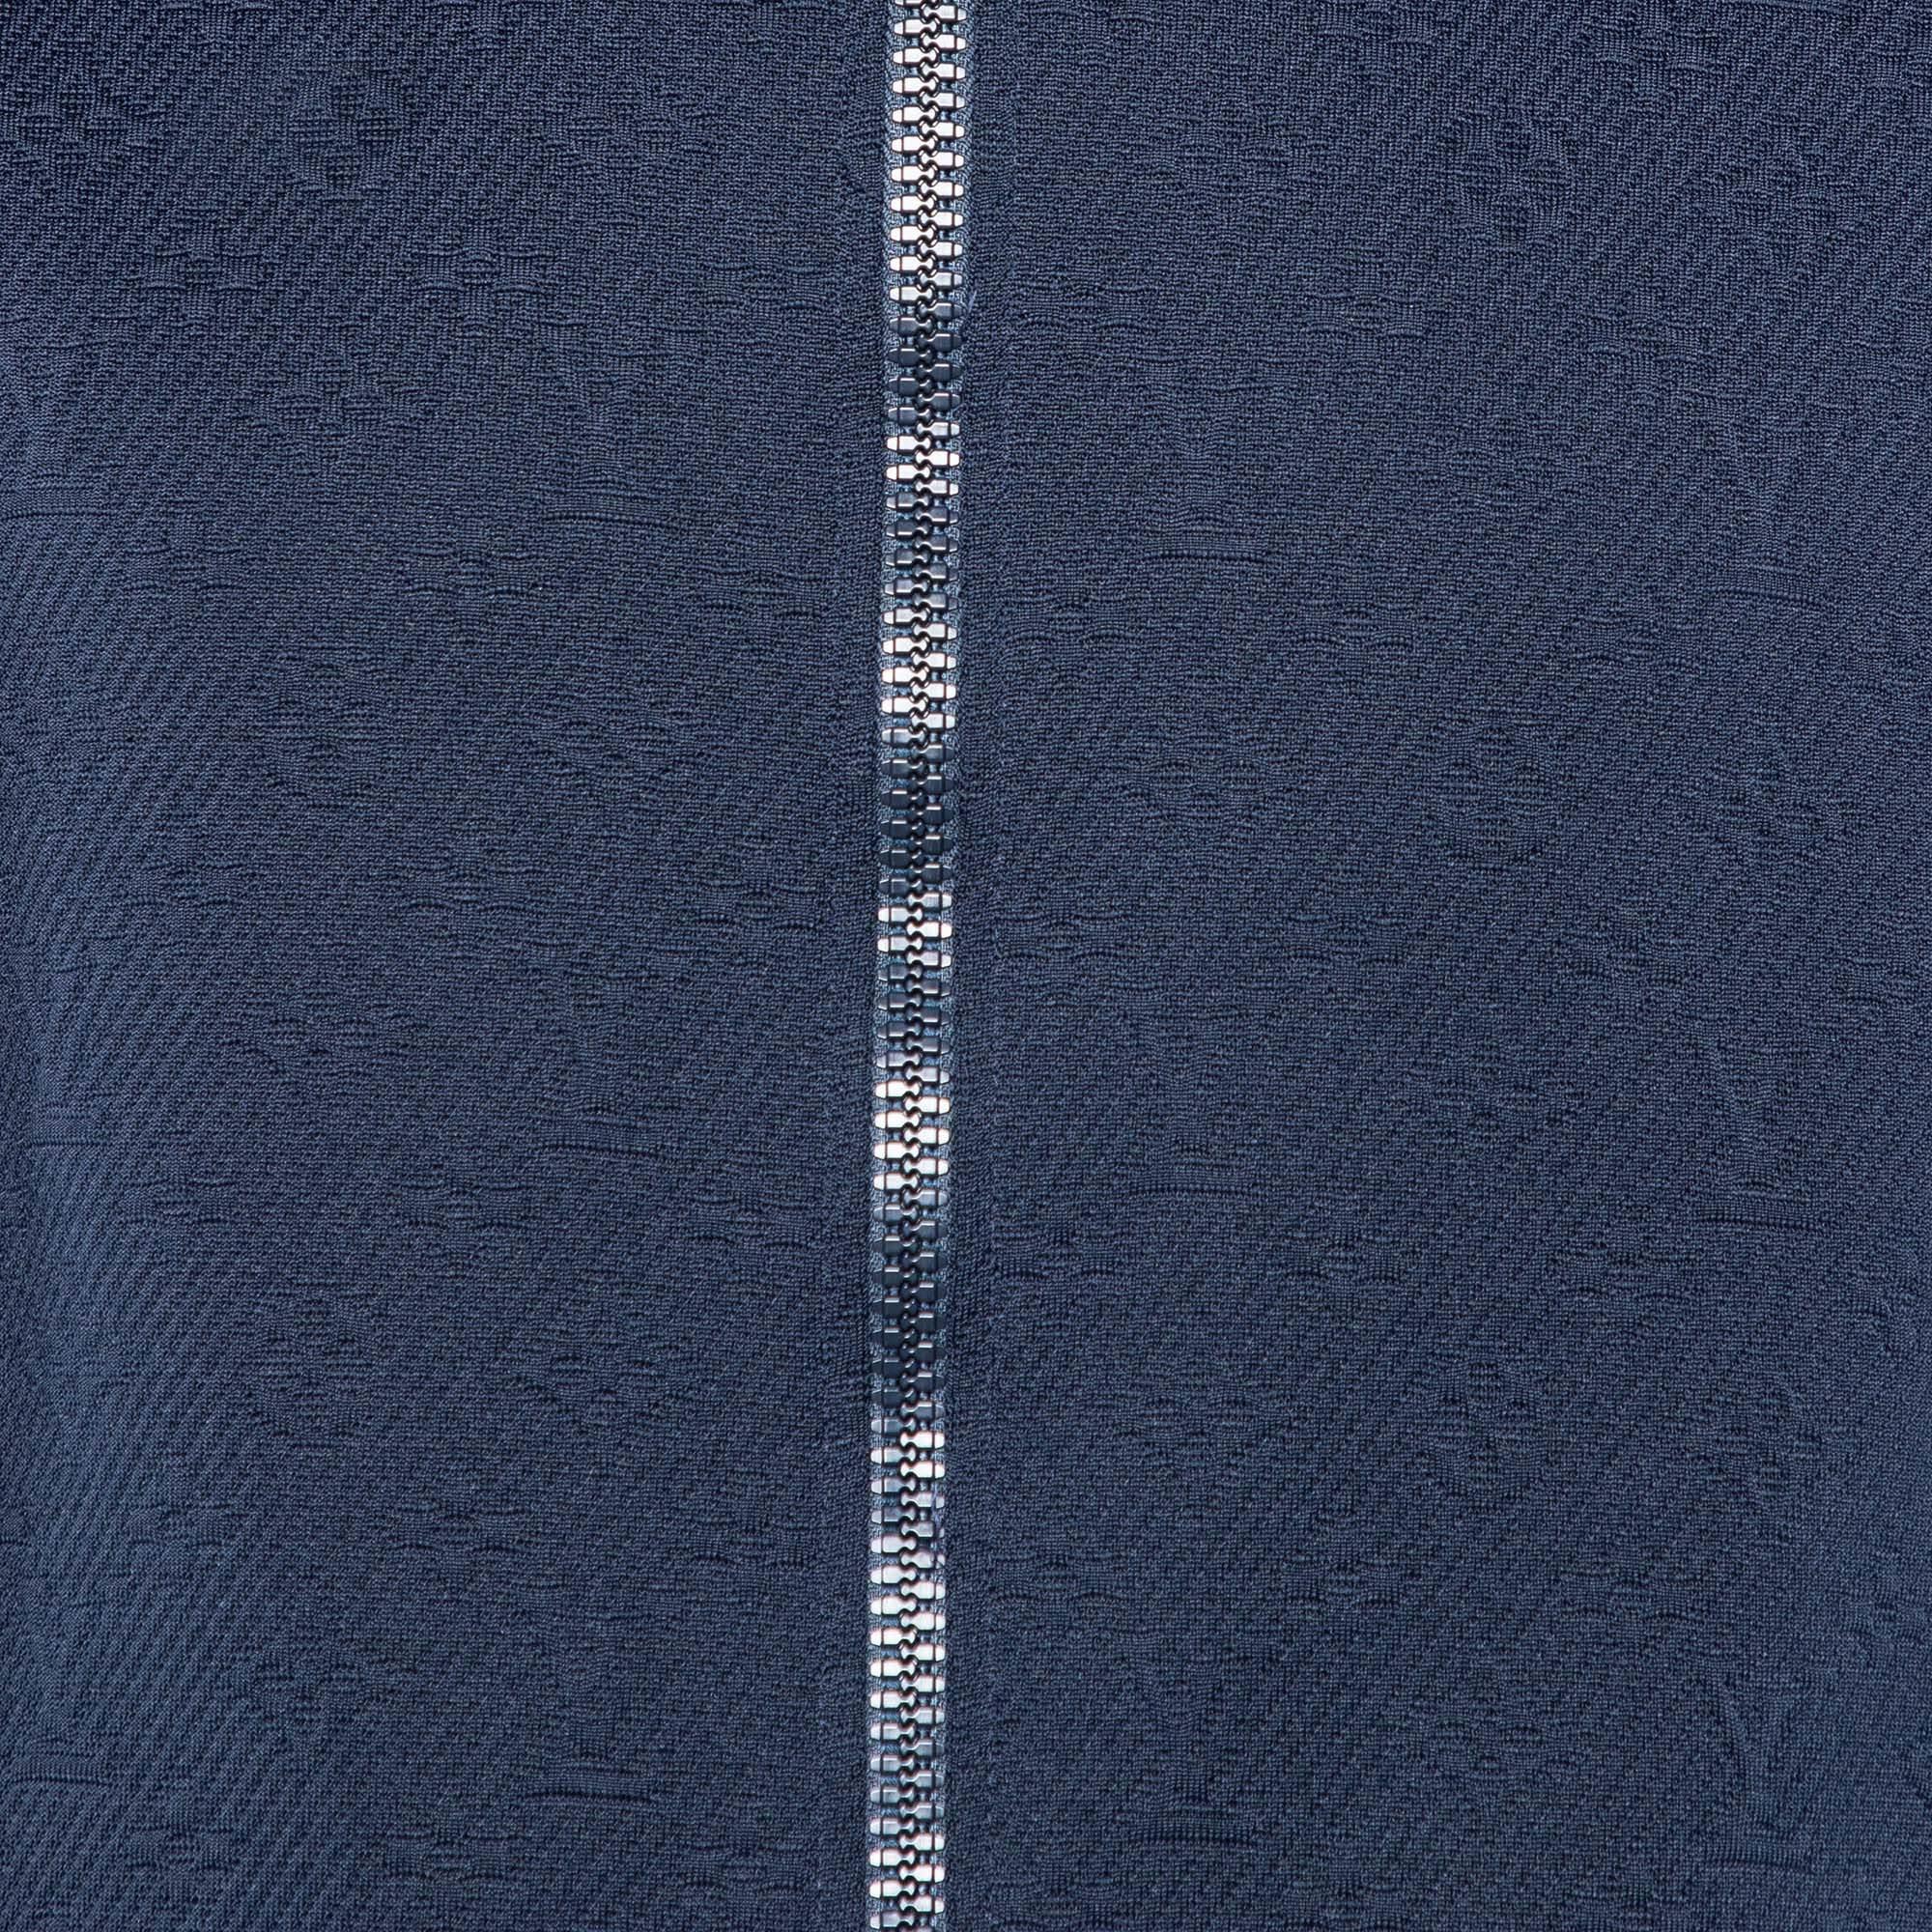 Black Louis Vuitton Navy Blue Monogram Jacquard Zip Front Jacket S